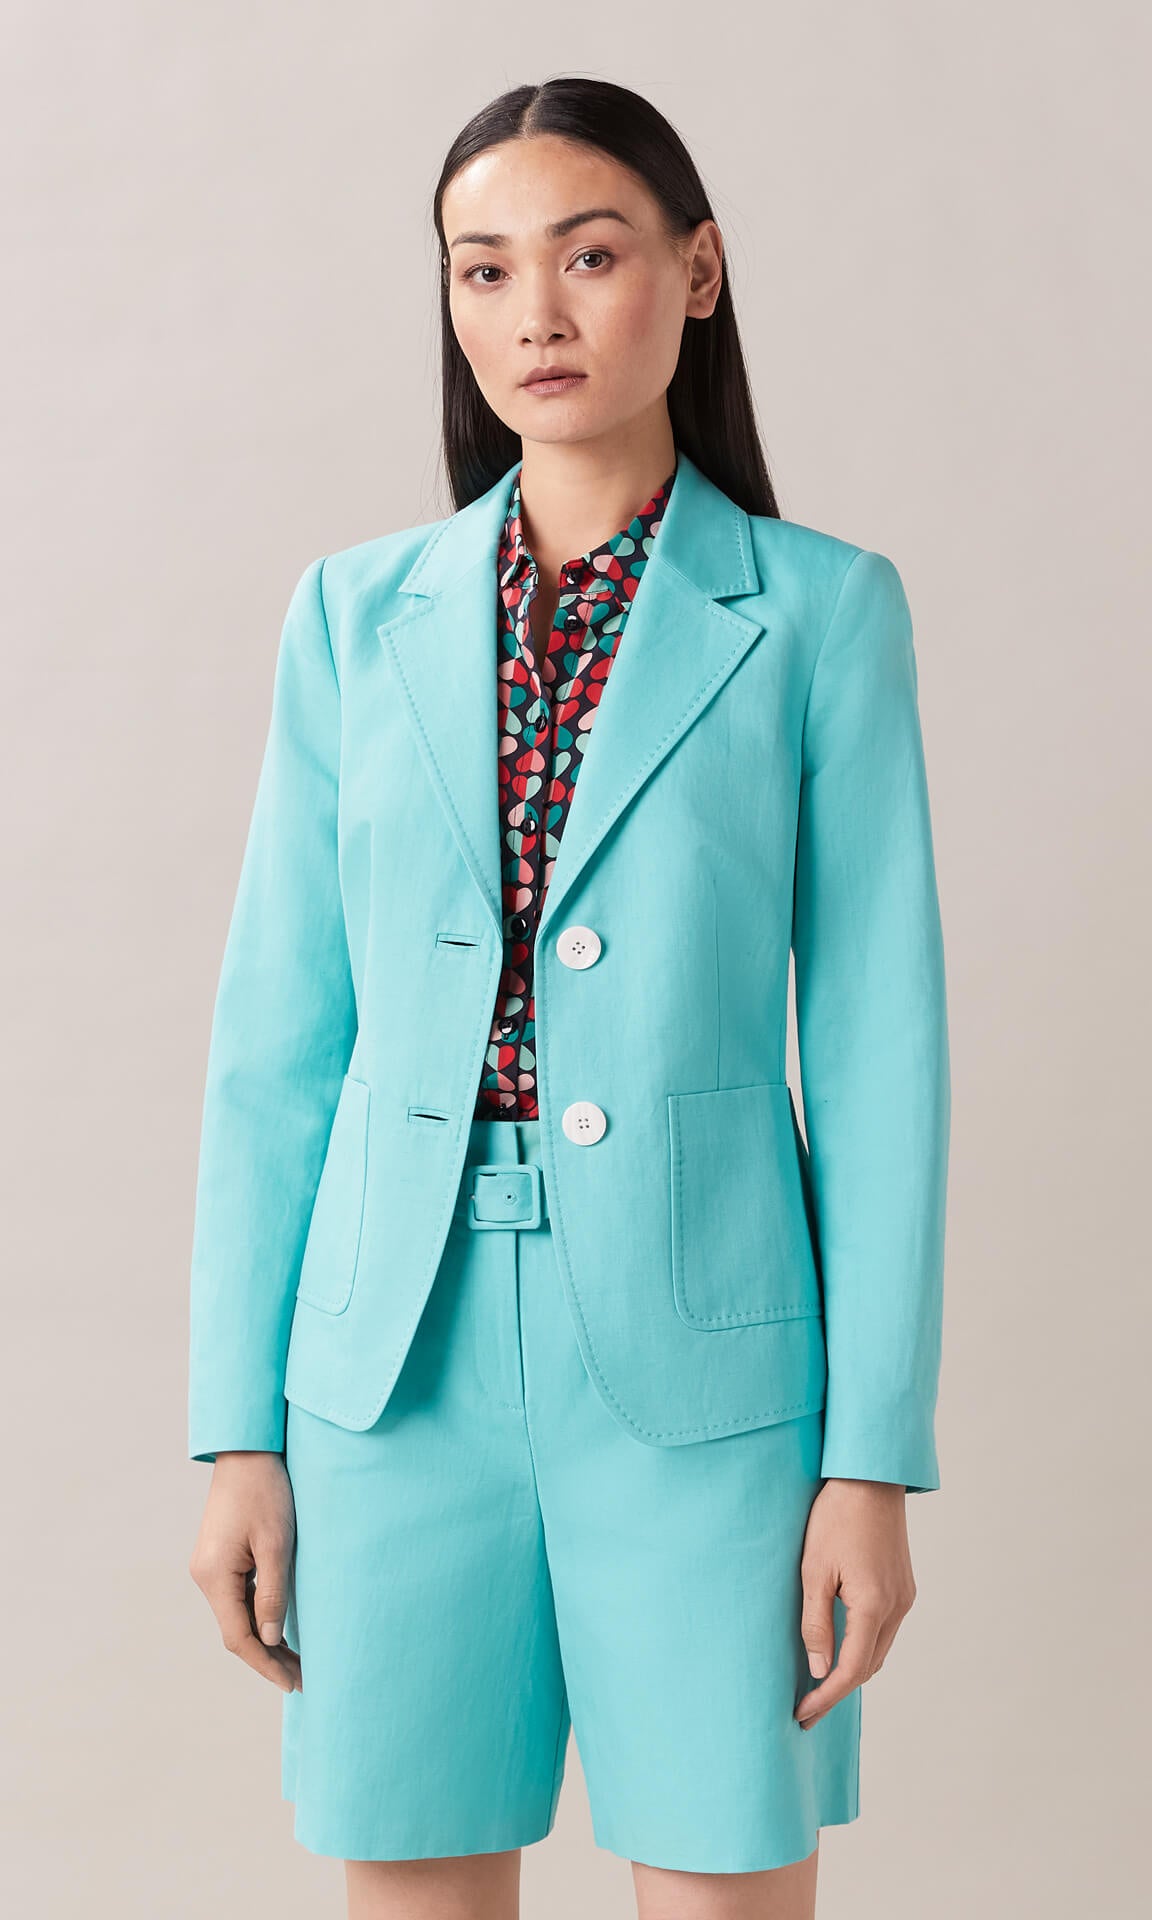 Designer Blazers for Women|Teal Blazer Women Suit Jacket – Anna Thomas